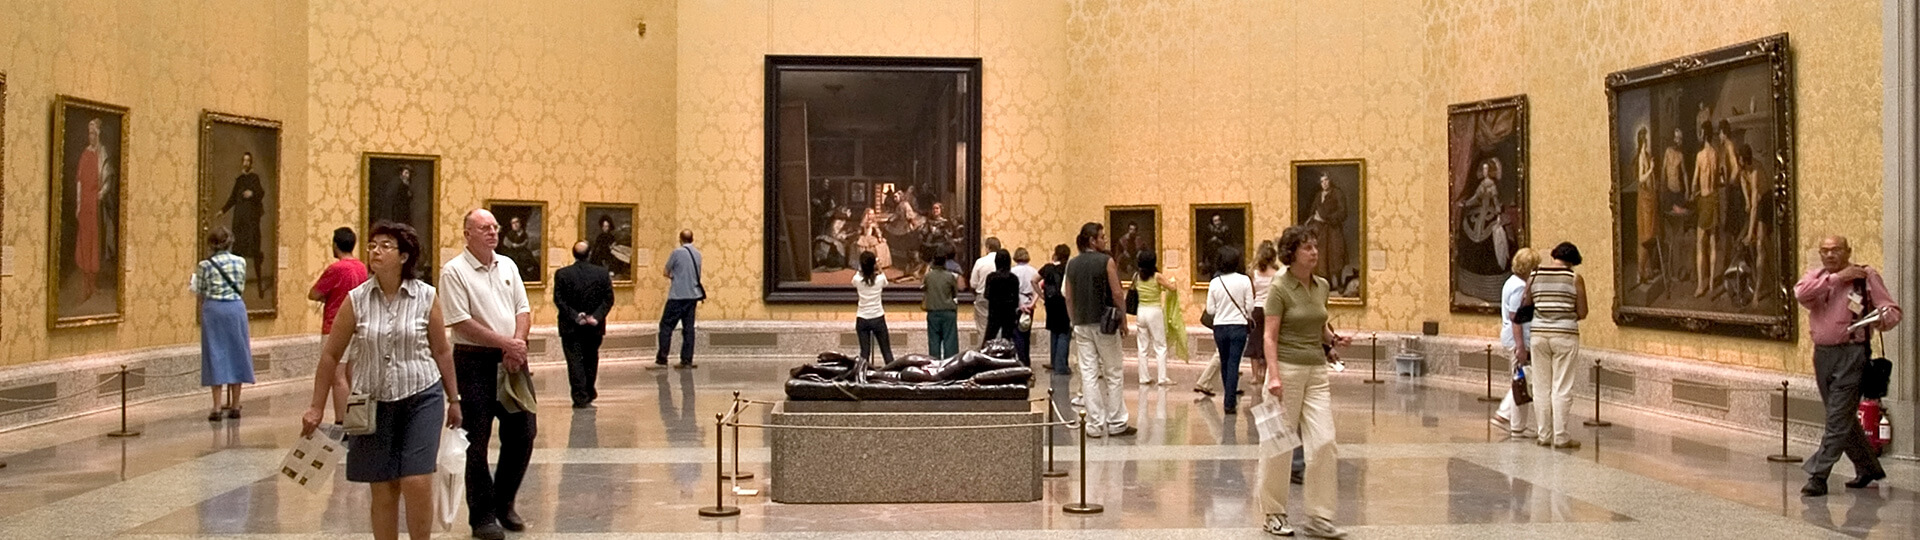 Salle Velázquez, Musée du Prado. Madrid